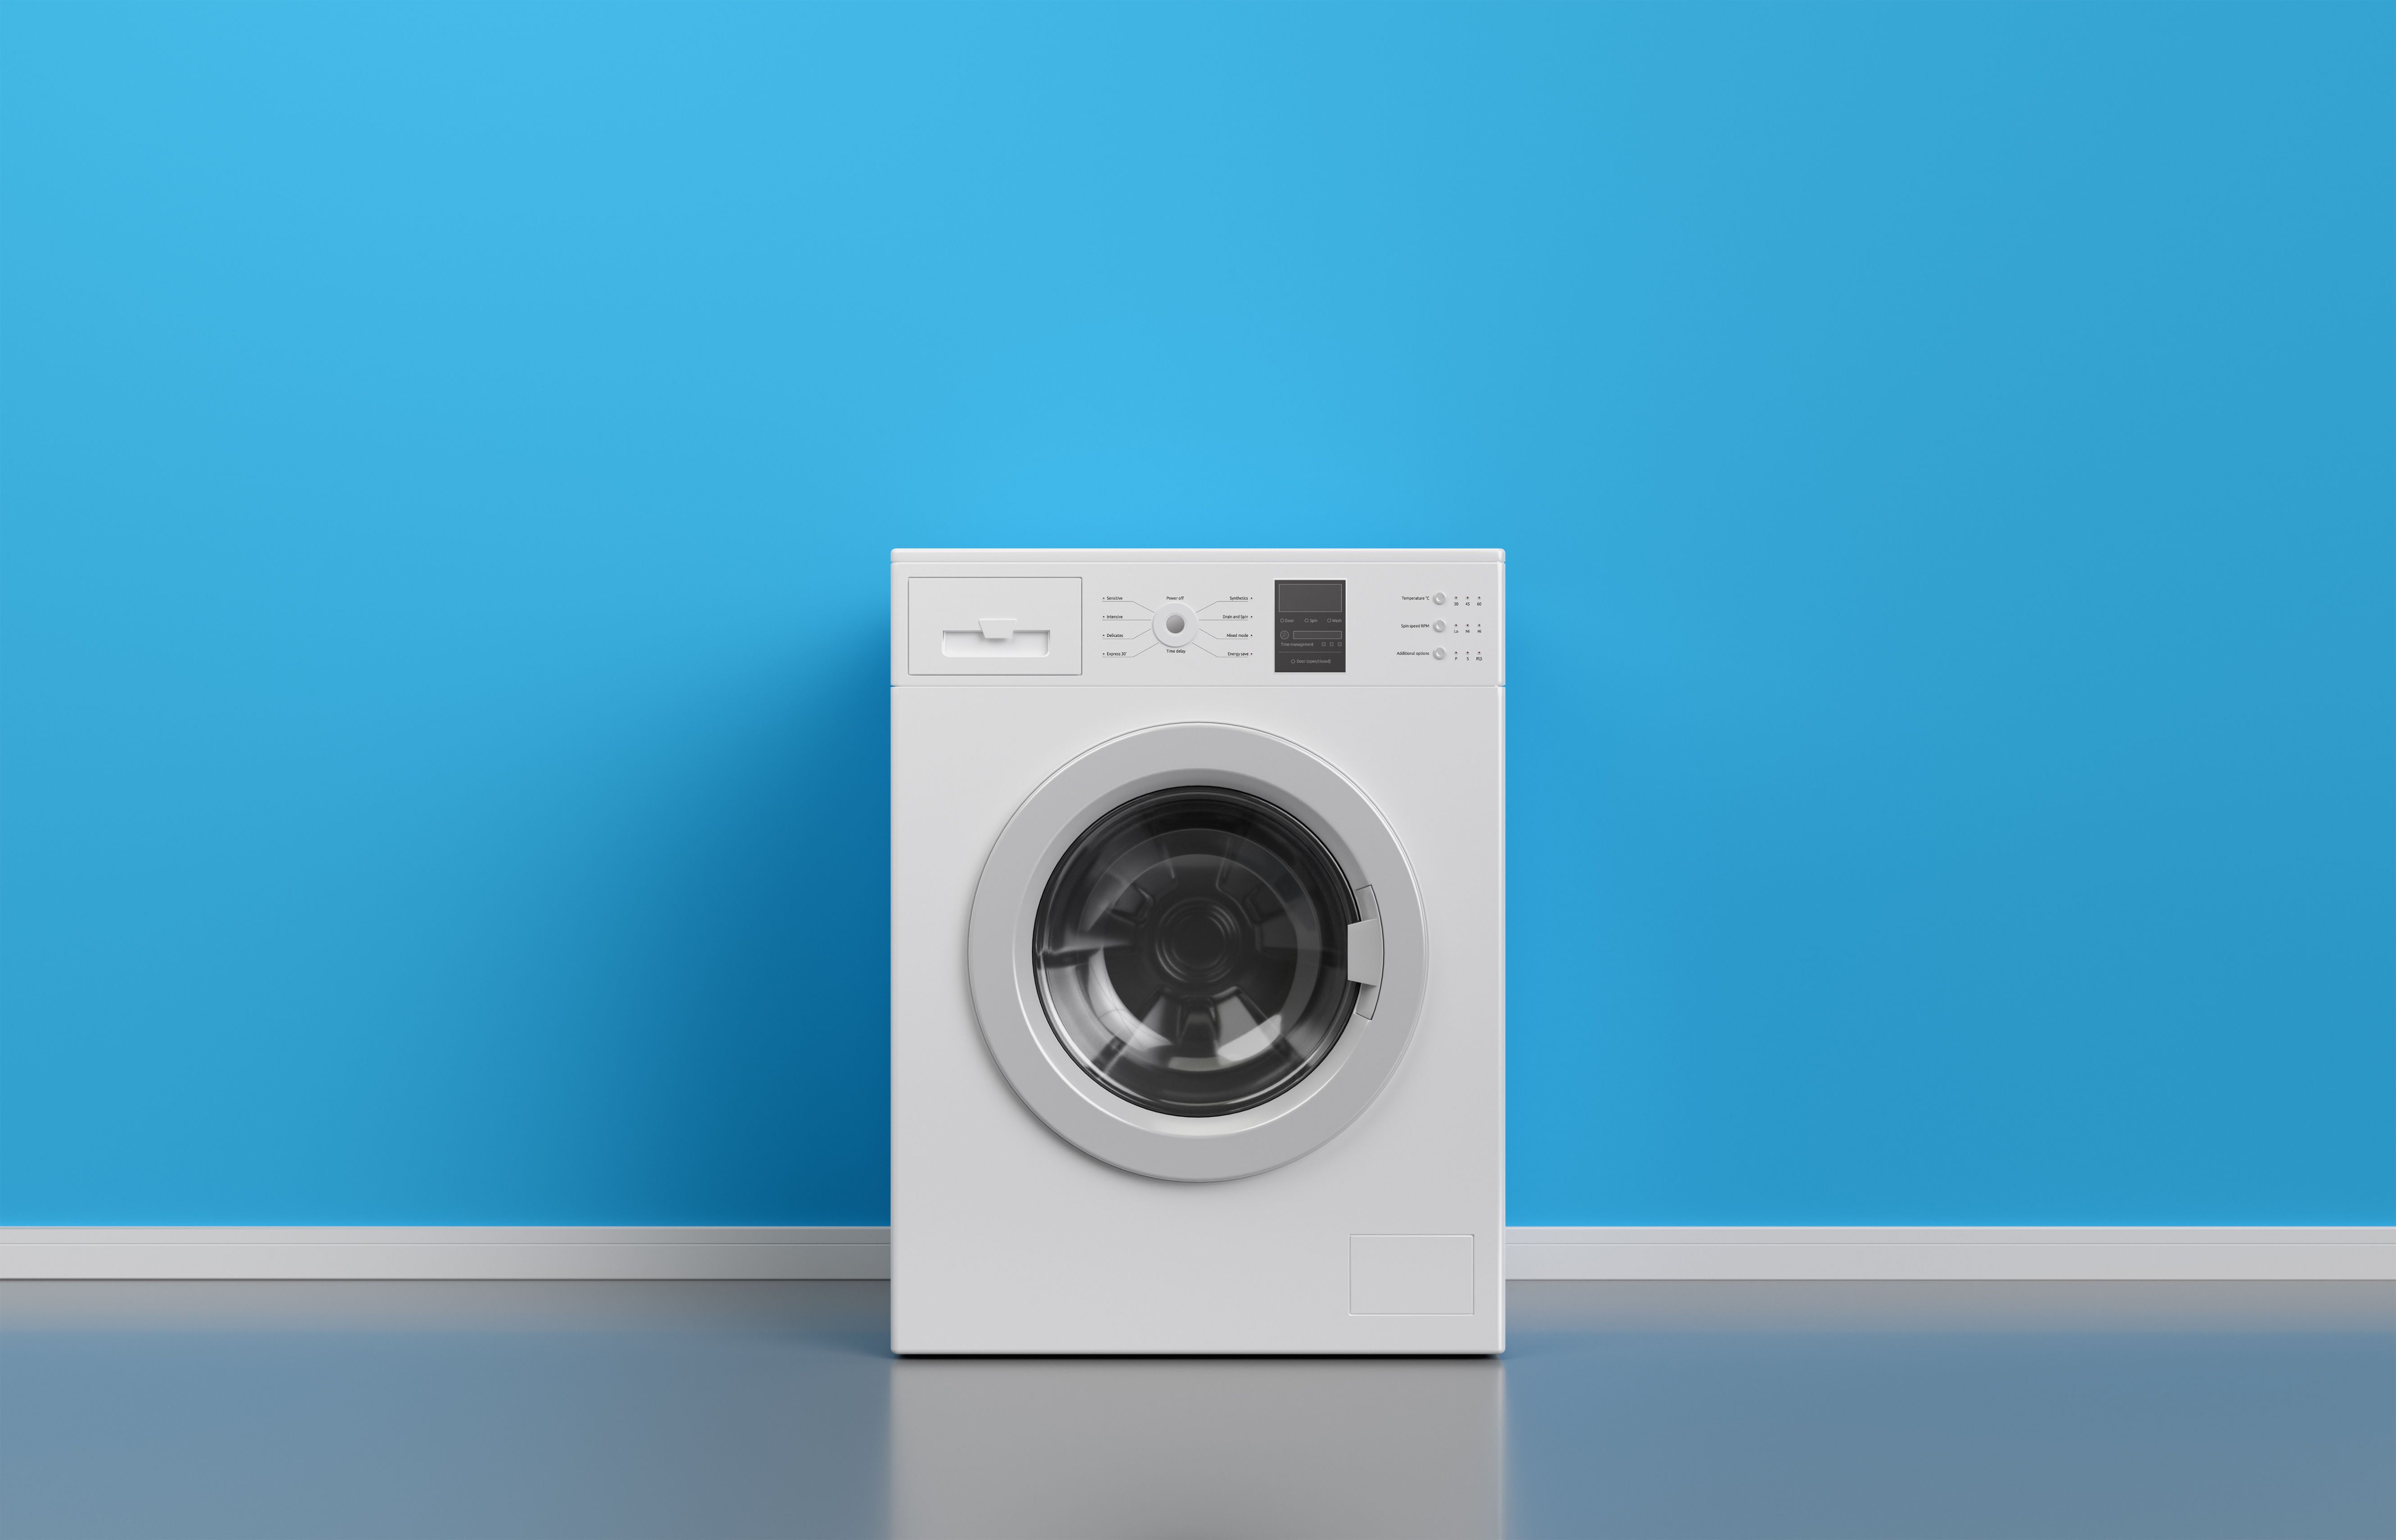 Mona Lisa coupon marketing Washing Machine Cleaner - How to Clean a Washing Machine